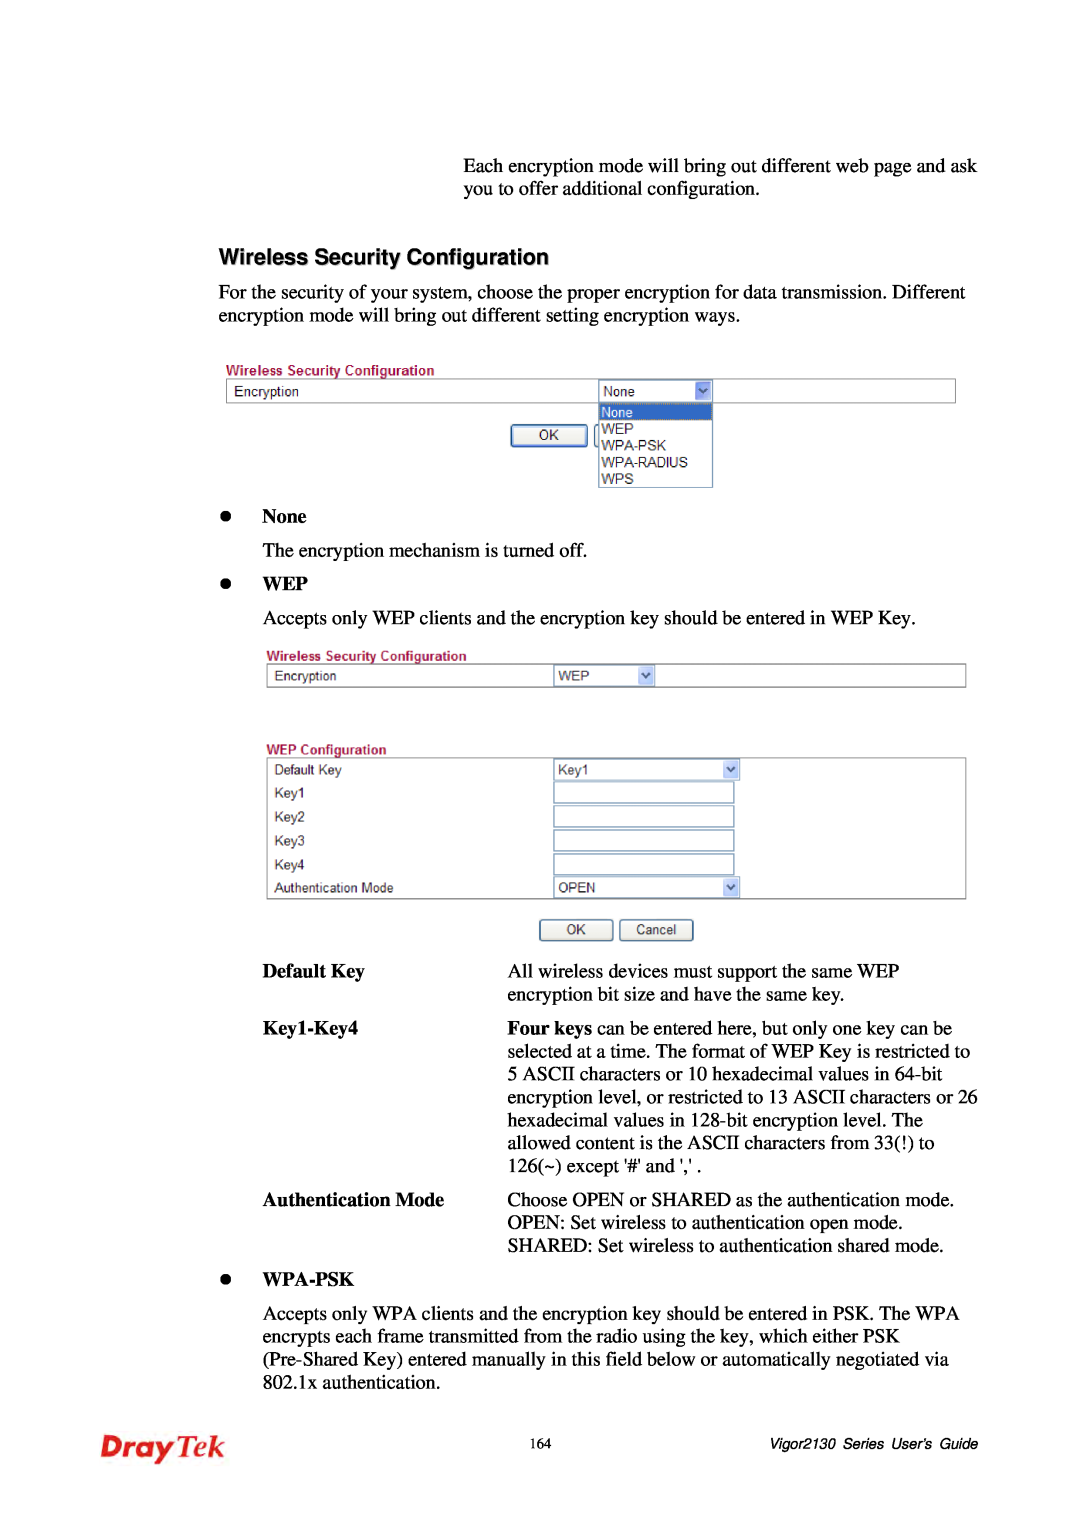 Draytek 2130 manual Wireless Security Configuration, z None, z WEP, Default Key, Key1-Key4, Authentication Mode, z WPA-PSK 